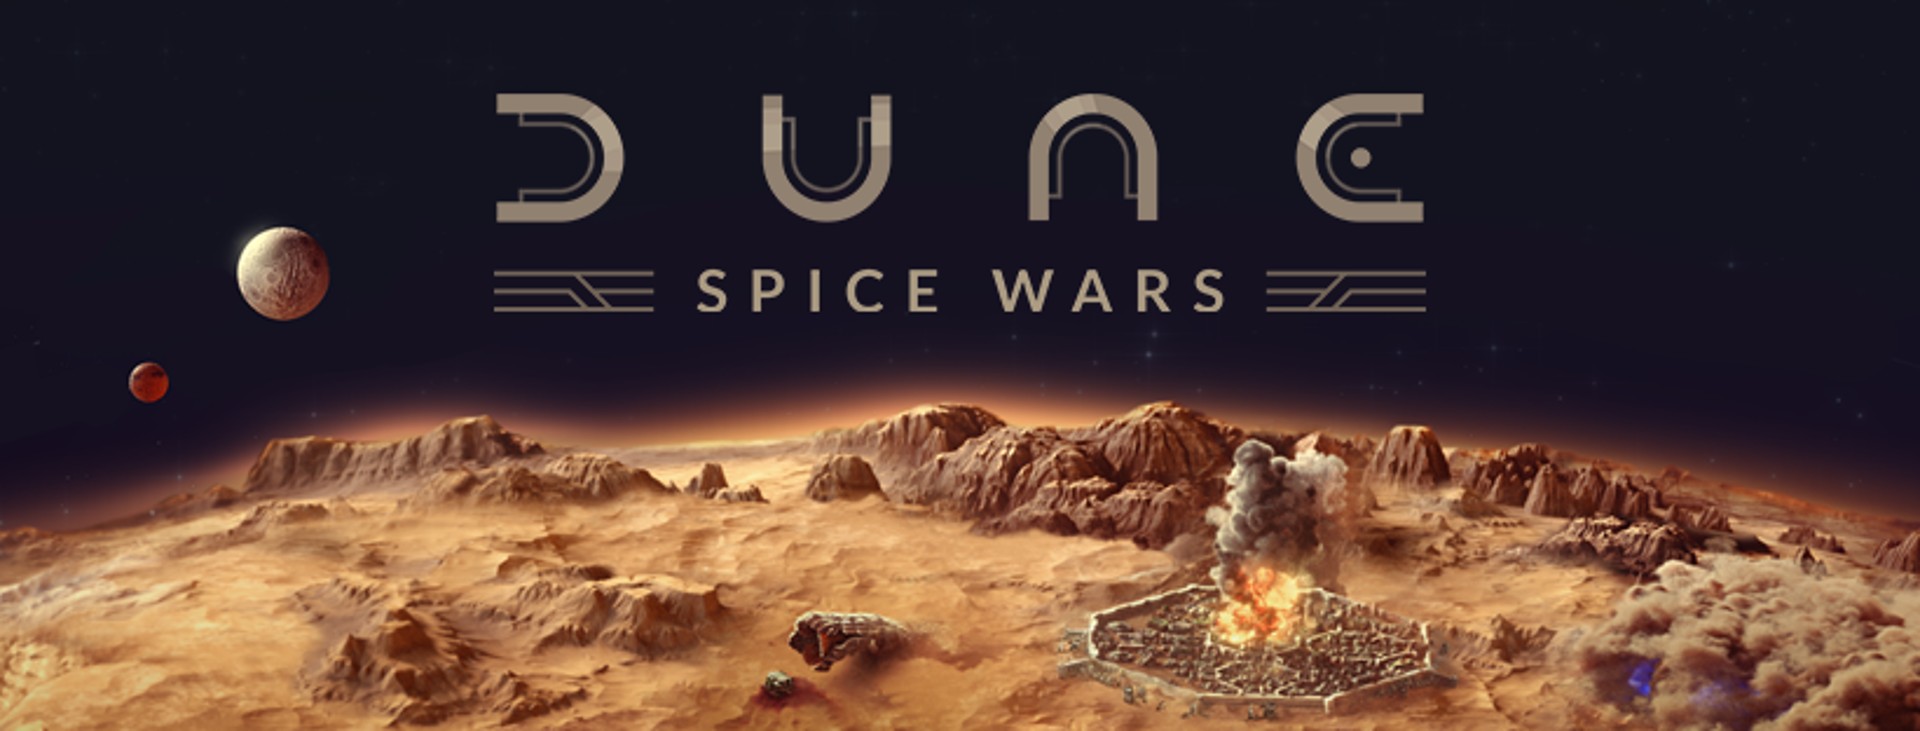 Dune: Spice Wars ปล่อยตัวอย่างการเล่น การผสมผสานระหว่าง 4X กับ RTS เข้าด้วยกัน